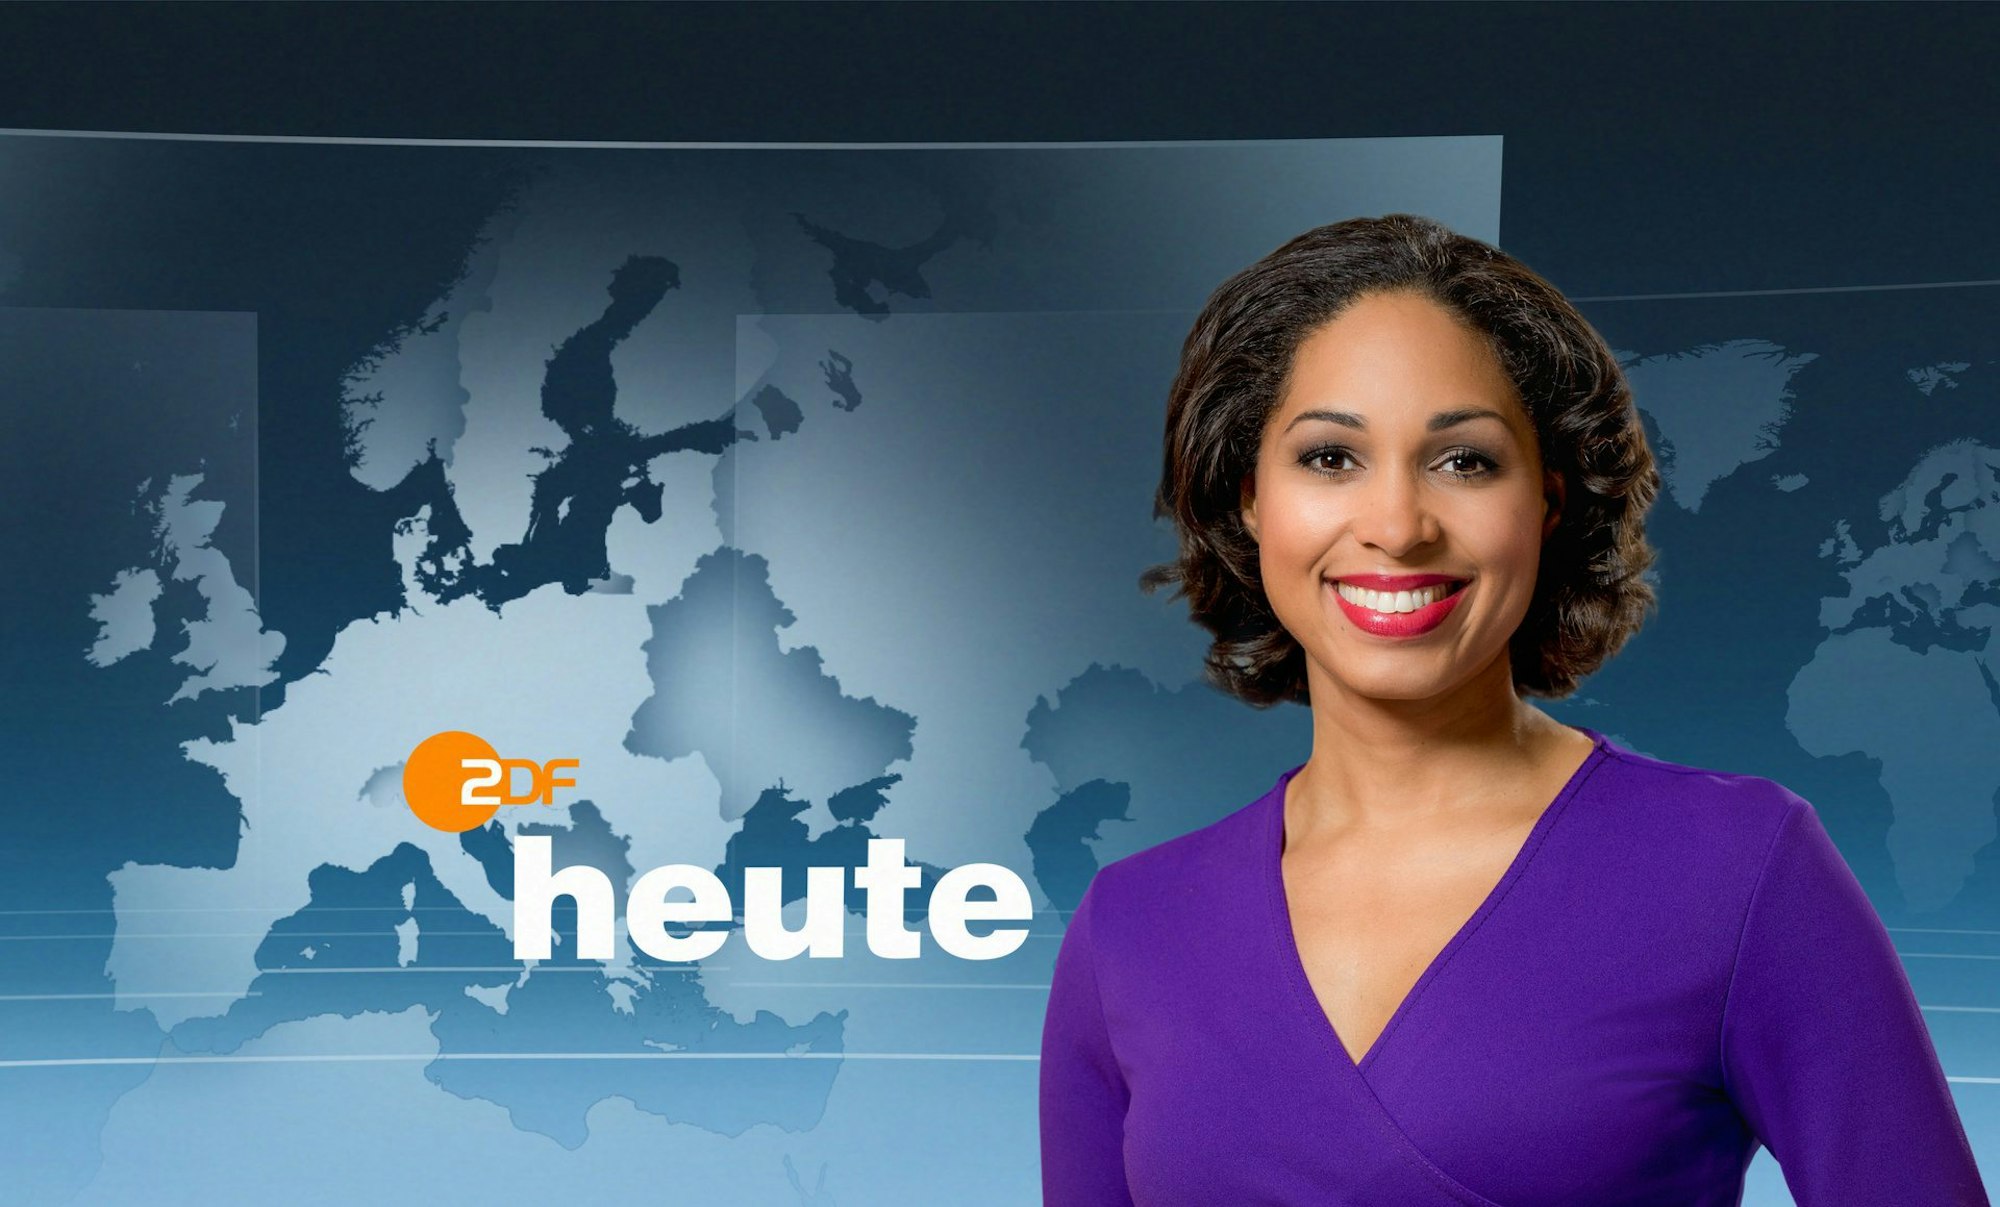 Jana Pareigis steigt als Moderatorin bei der ZDF-Sendung „heute“ ein